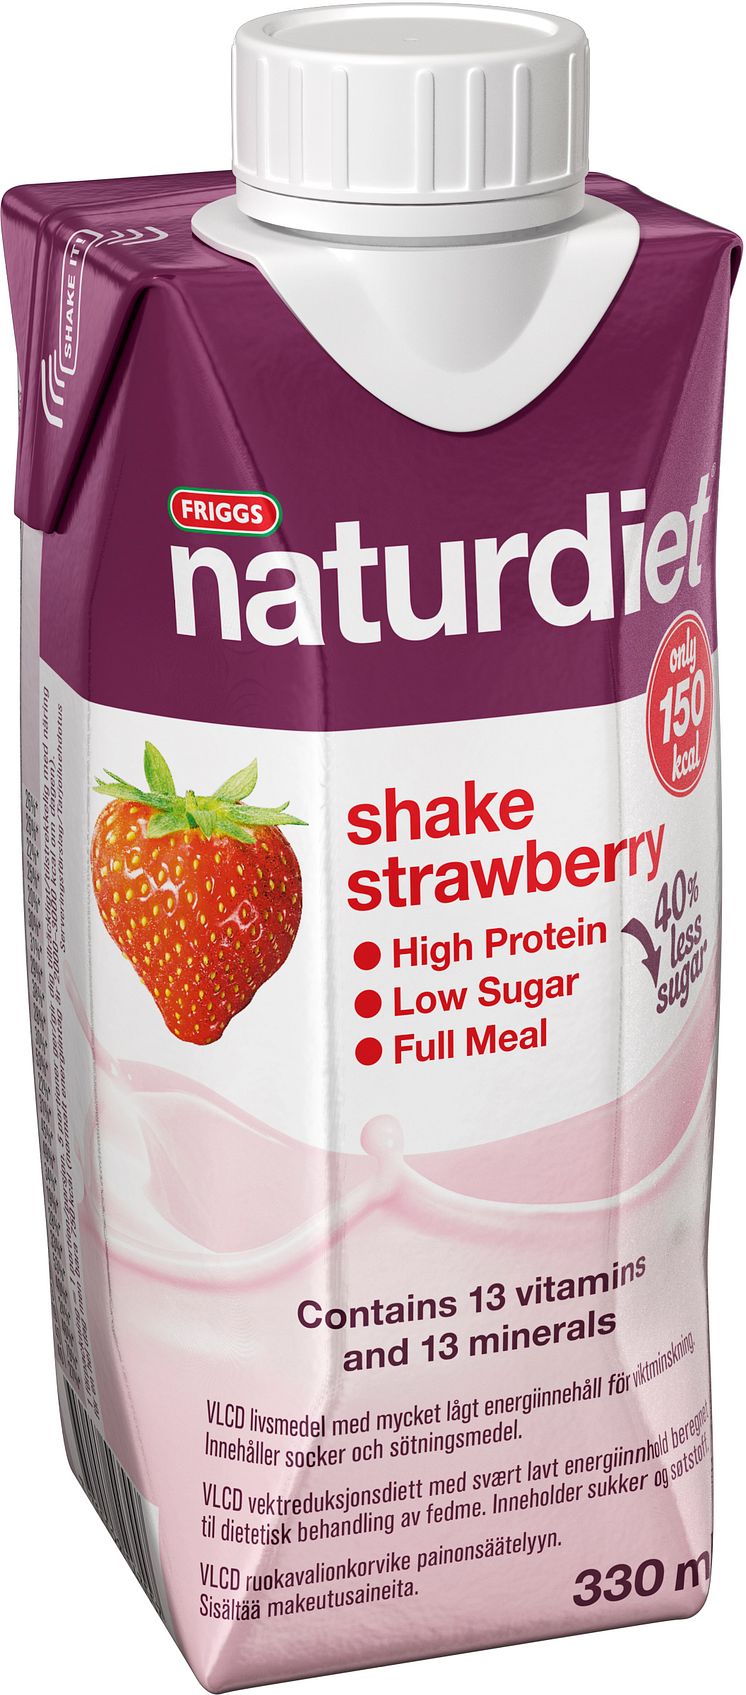 Naturdiet Strawberry shake - nu med mindre socker